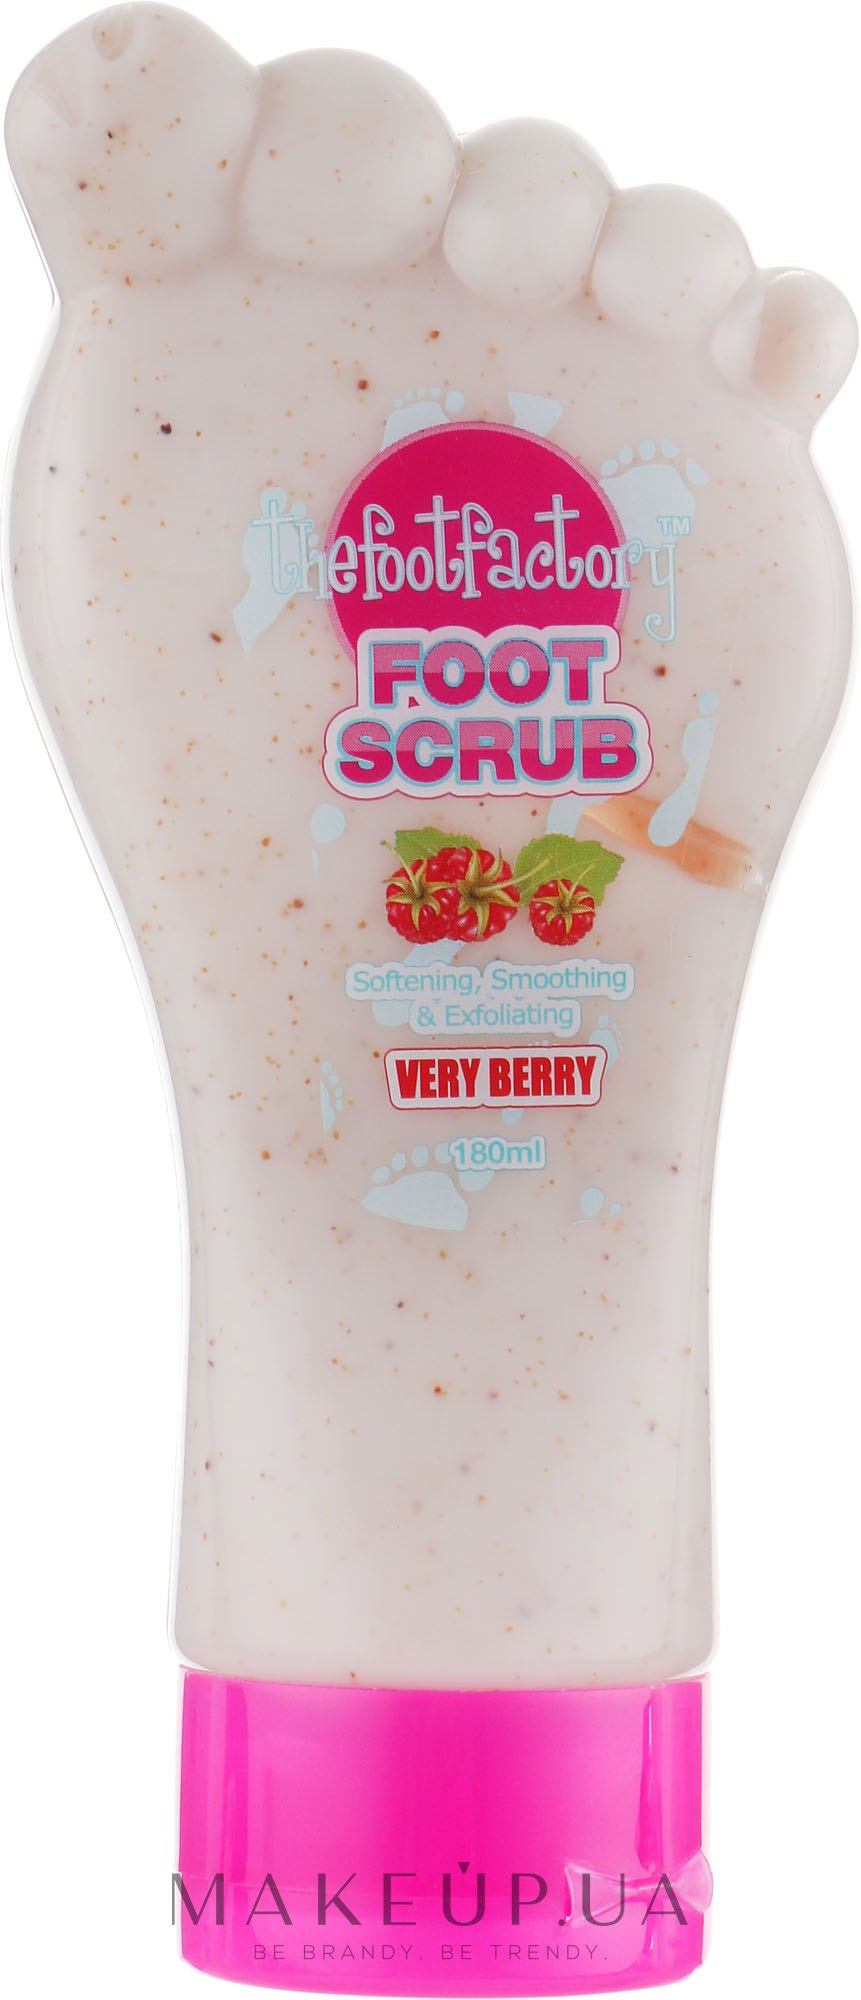 Скраб для ног - The Foot Factory "Very Berry" Foot Scrub — фото 180ml